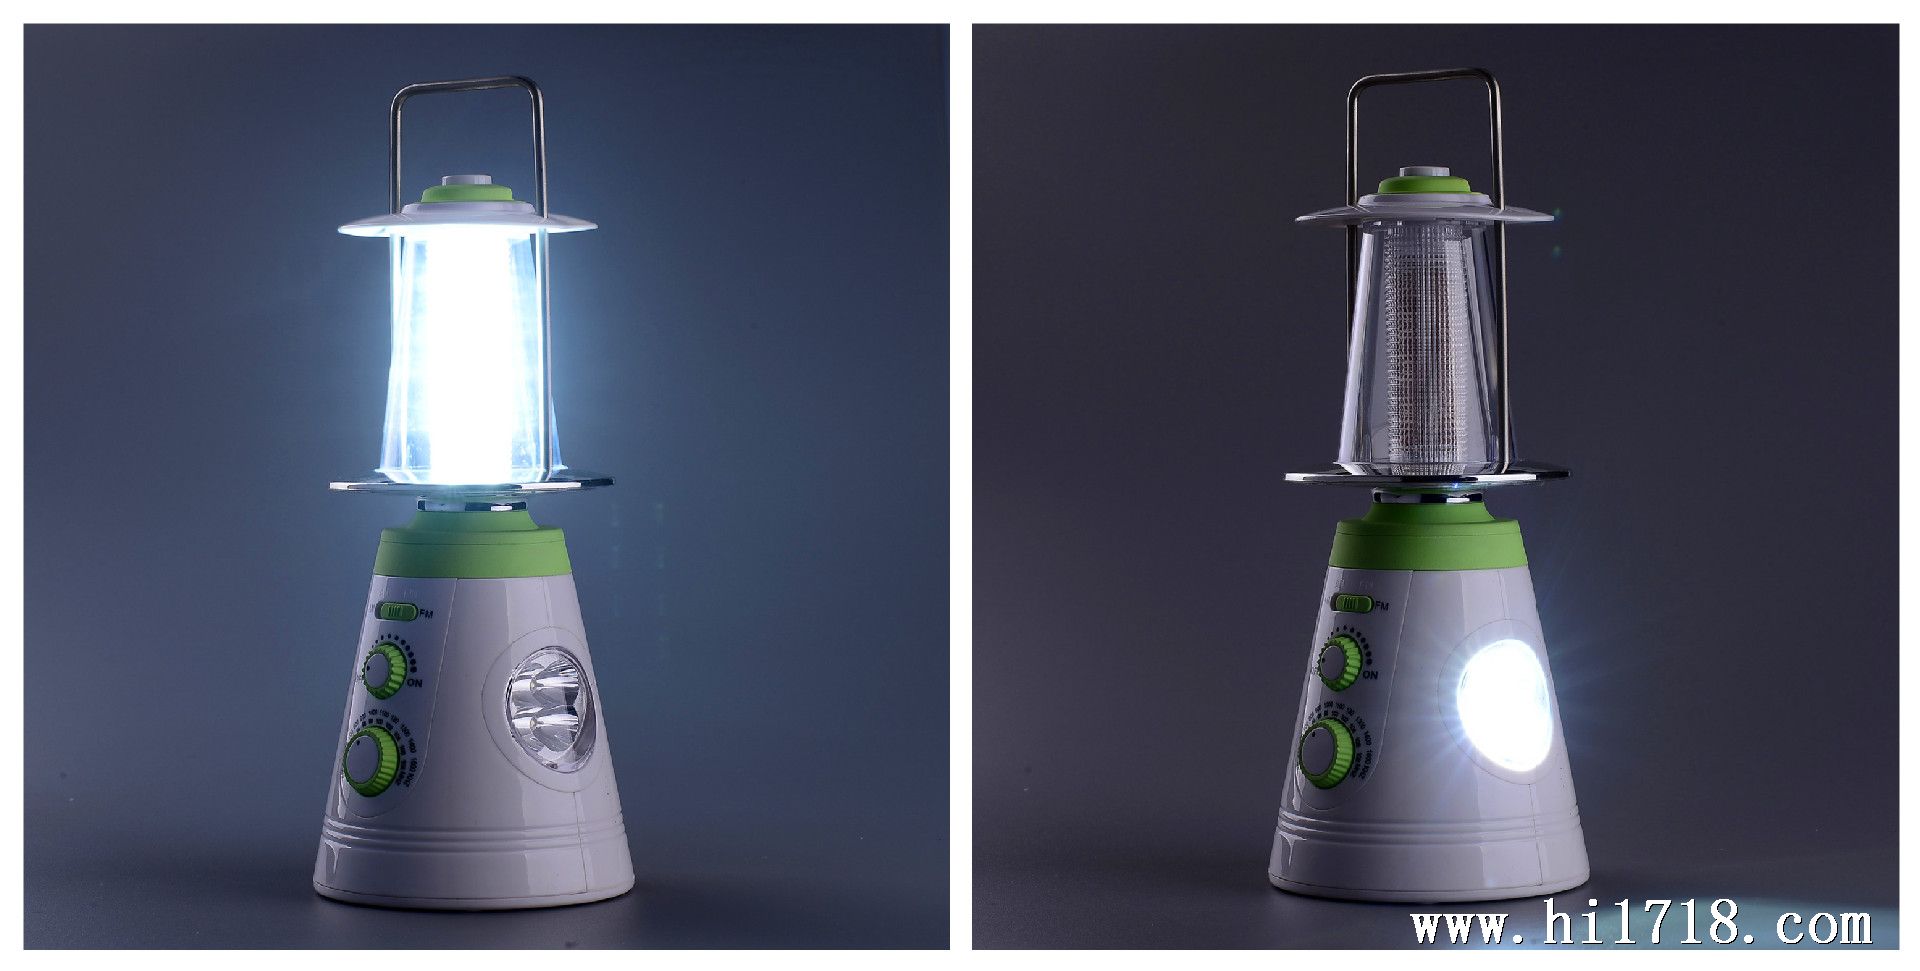 SL991AF camping lantern with A